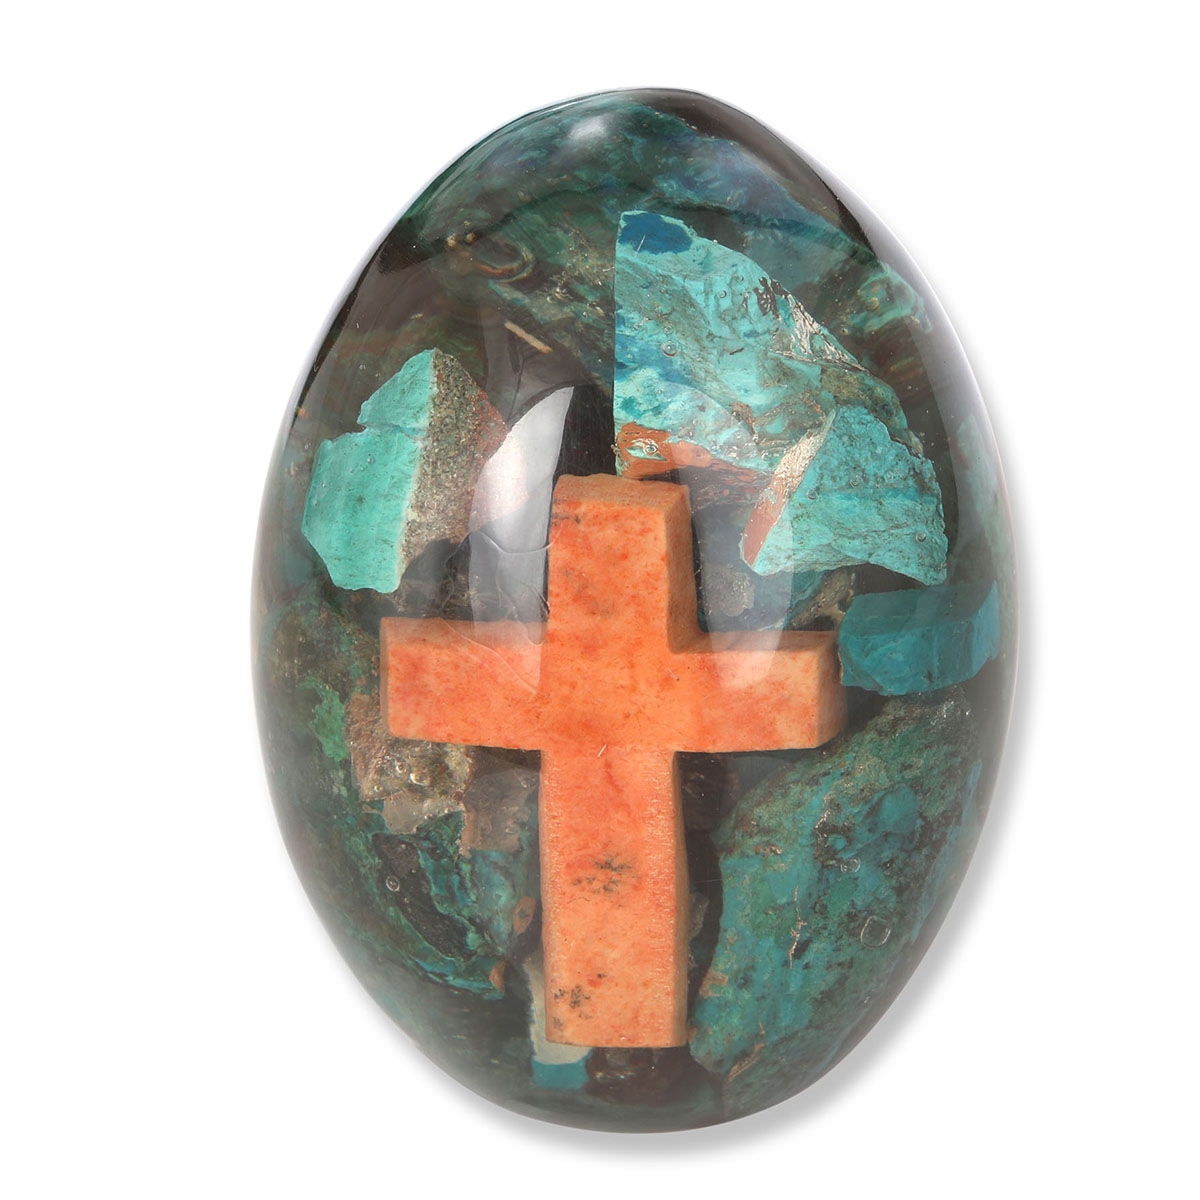 Rafael Jewelry Glass Egg with Stone Cross and Eilat Stone  - 1